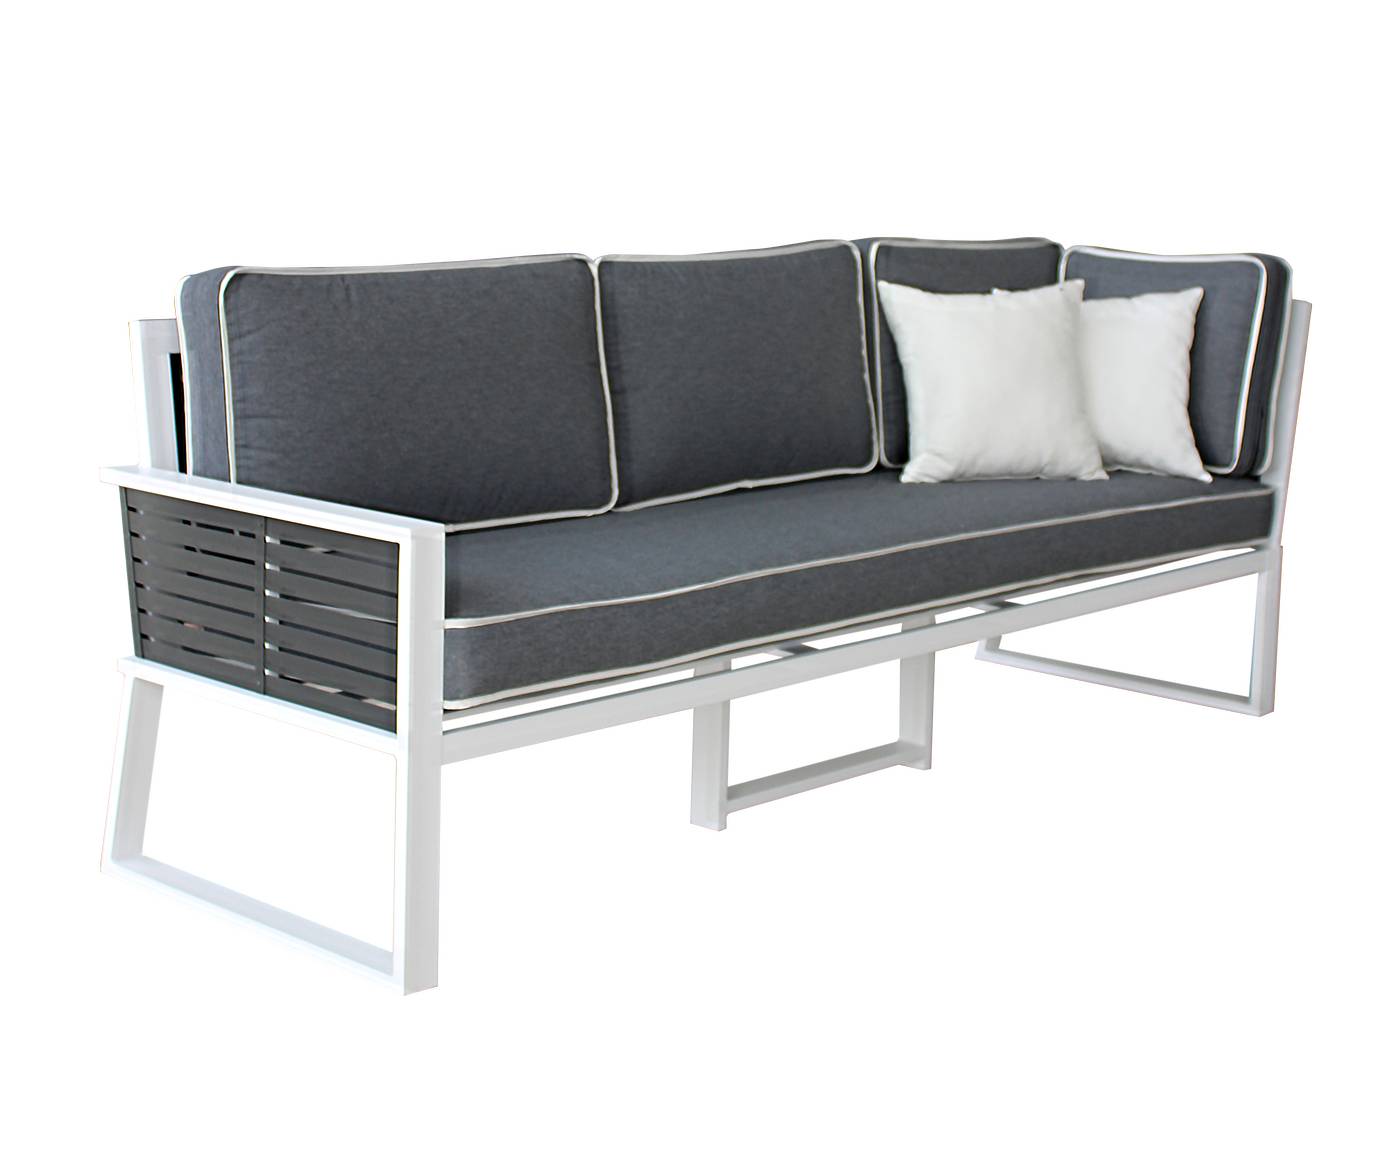 Set Rinconera Aluminio Luxe Yebel-30 - Exclusiva rinconera luxe 6 plazas + mesa de centro alta + banco. Estructura de aluminio bicolor.